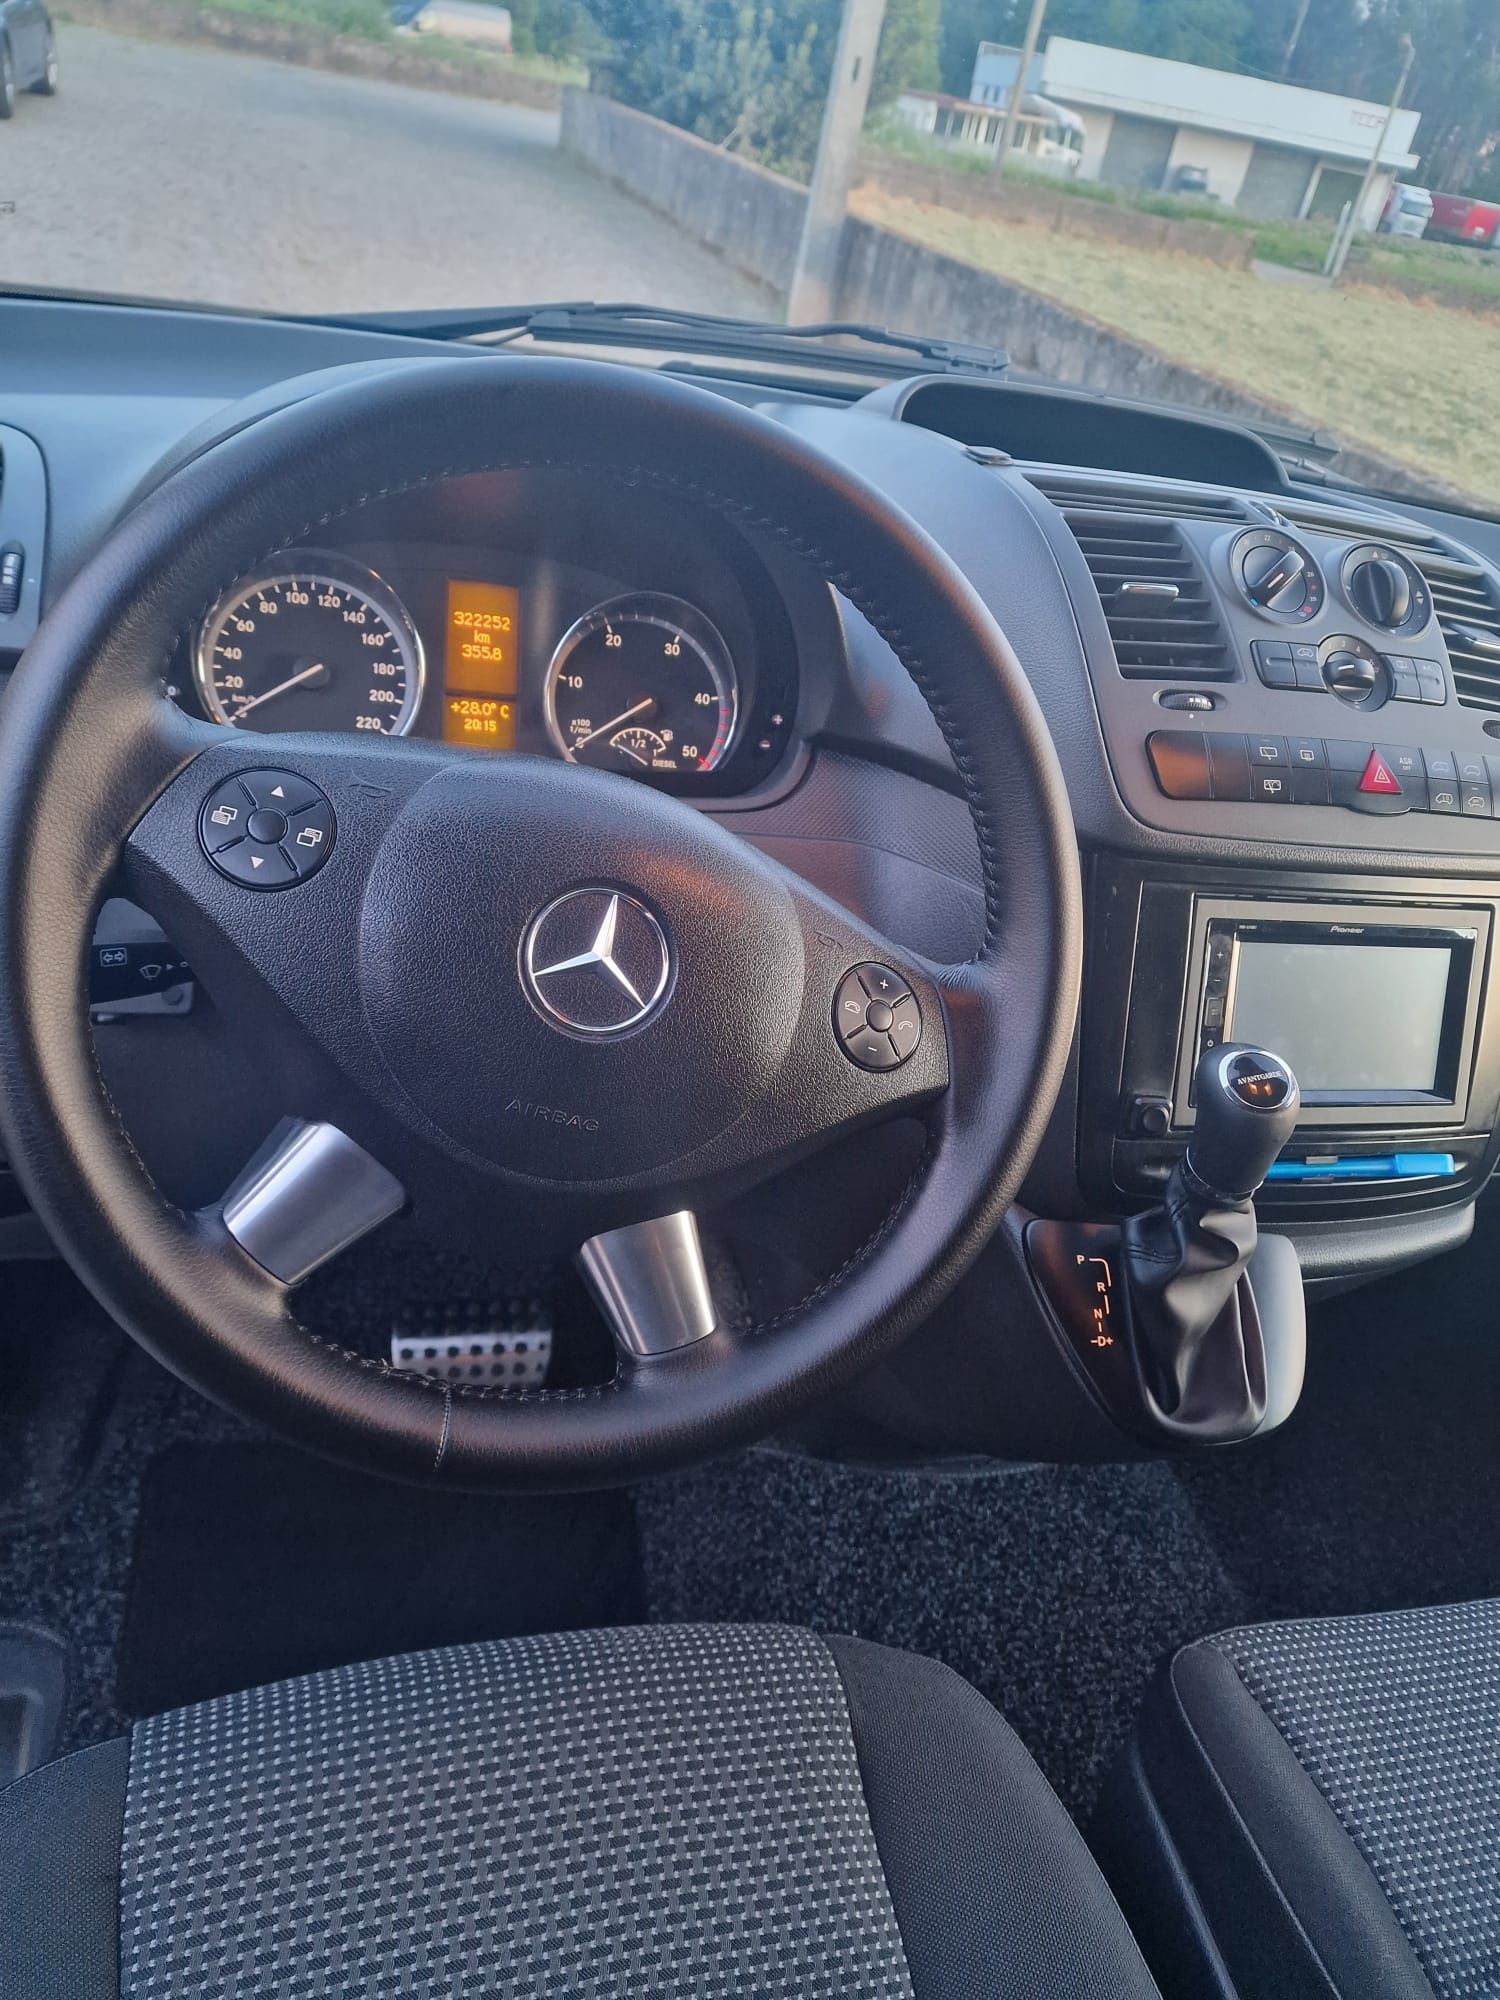 Mercedes vito 122 Cdi 3.0 V6 Avantgarde Full extras cx automática